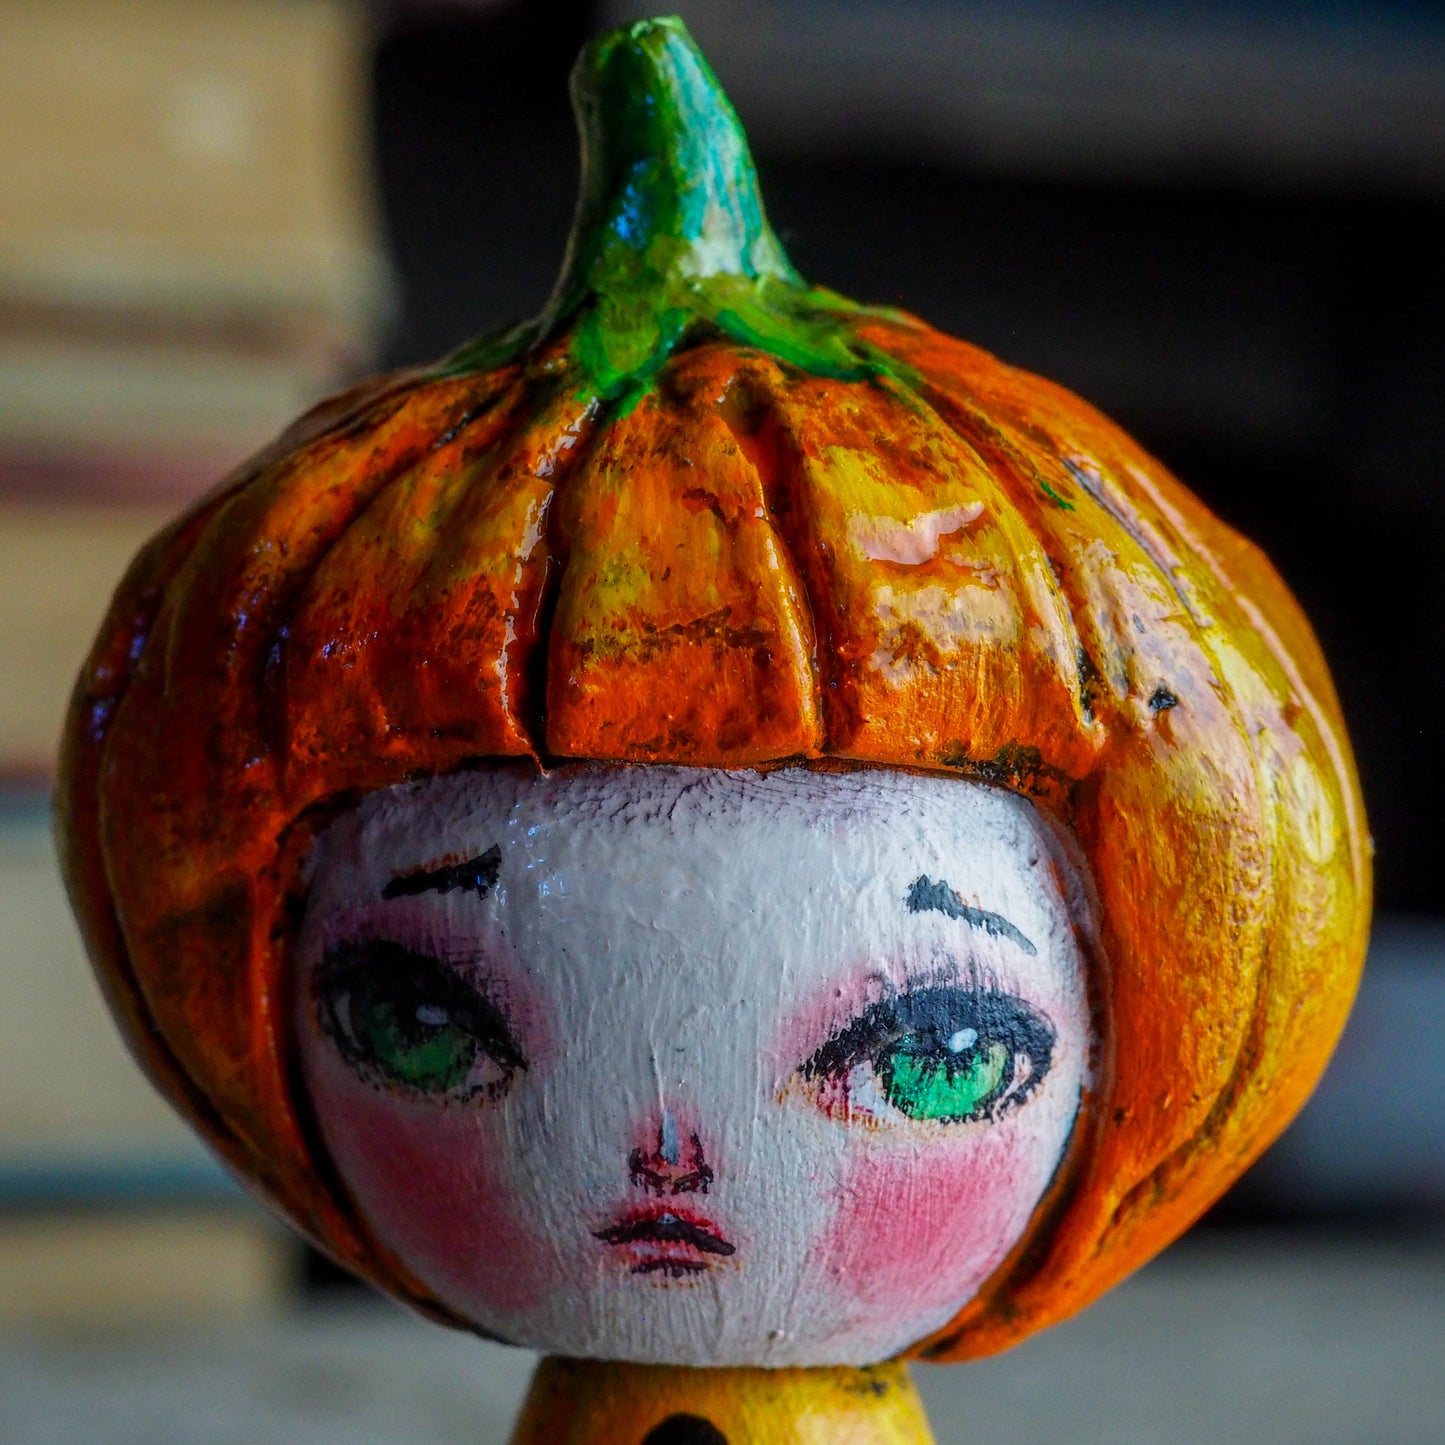 Danita original wooden kokeshi art doll. Home decor Halloween pumpkin jack-o-lantern girl mini figurine, perfect to decorate desks and shelves. Collectible items from Danita!